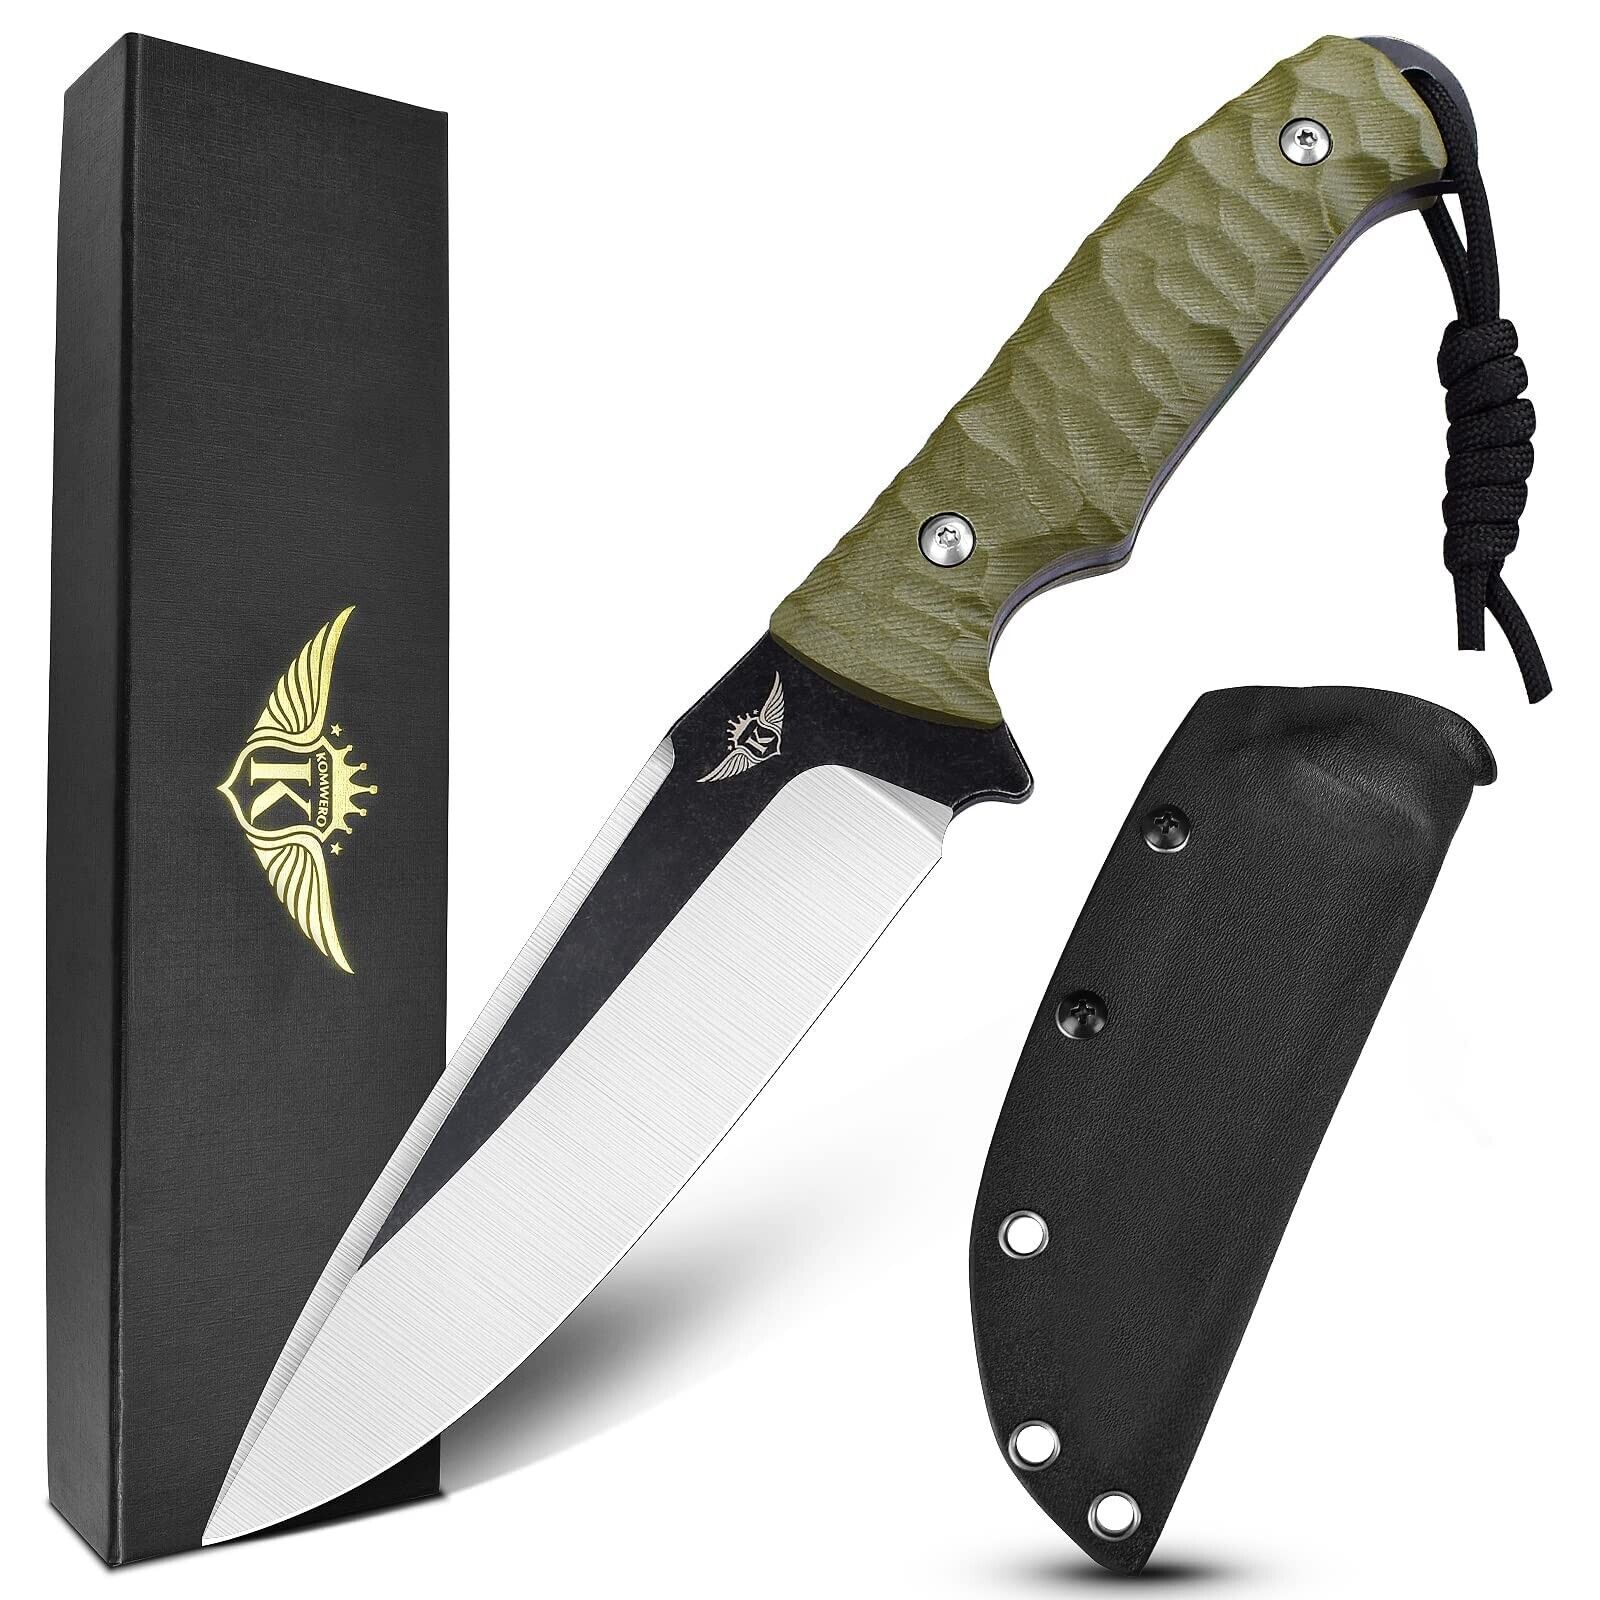 KOMWERO Outdoor Hunting Knife, 4.52 Inch Blade D2 Steel, Fixed Blade Knife wi...